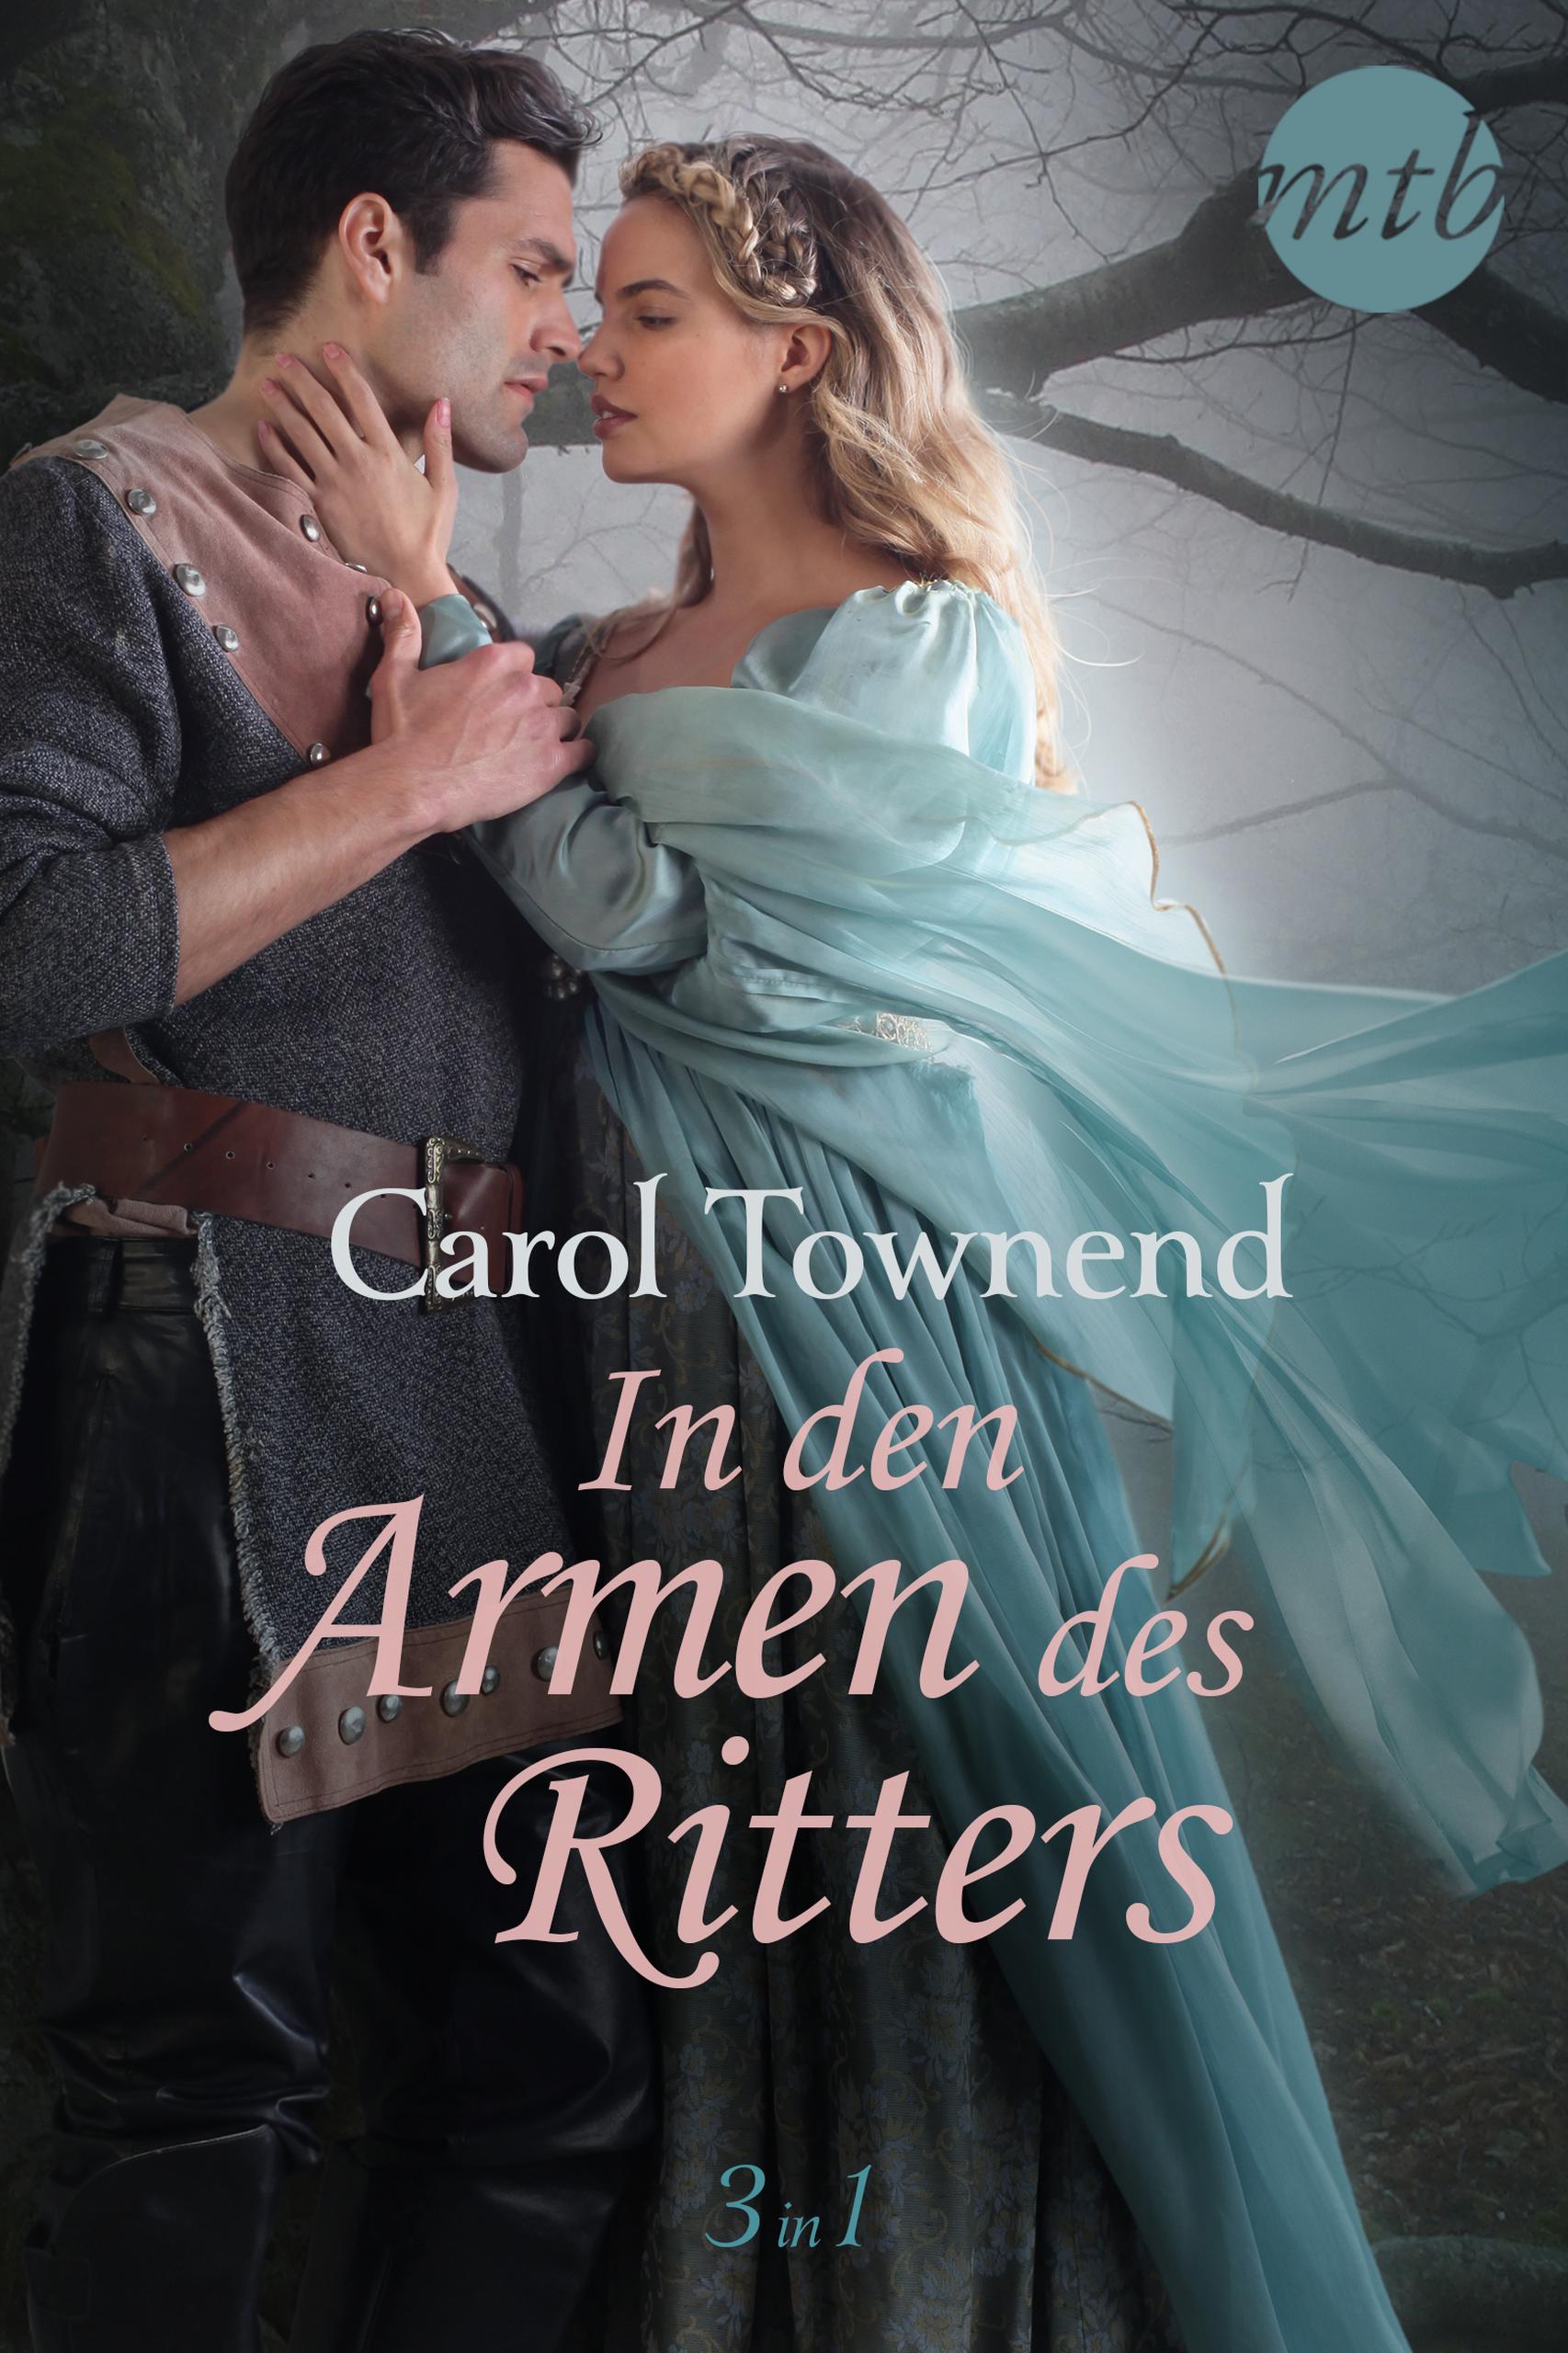 | Ritters (3in1) E-Book Deutschland Verlagsgruppe - In Armen des den HarperCollins